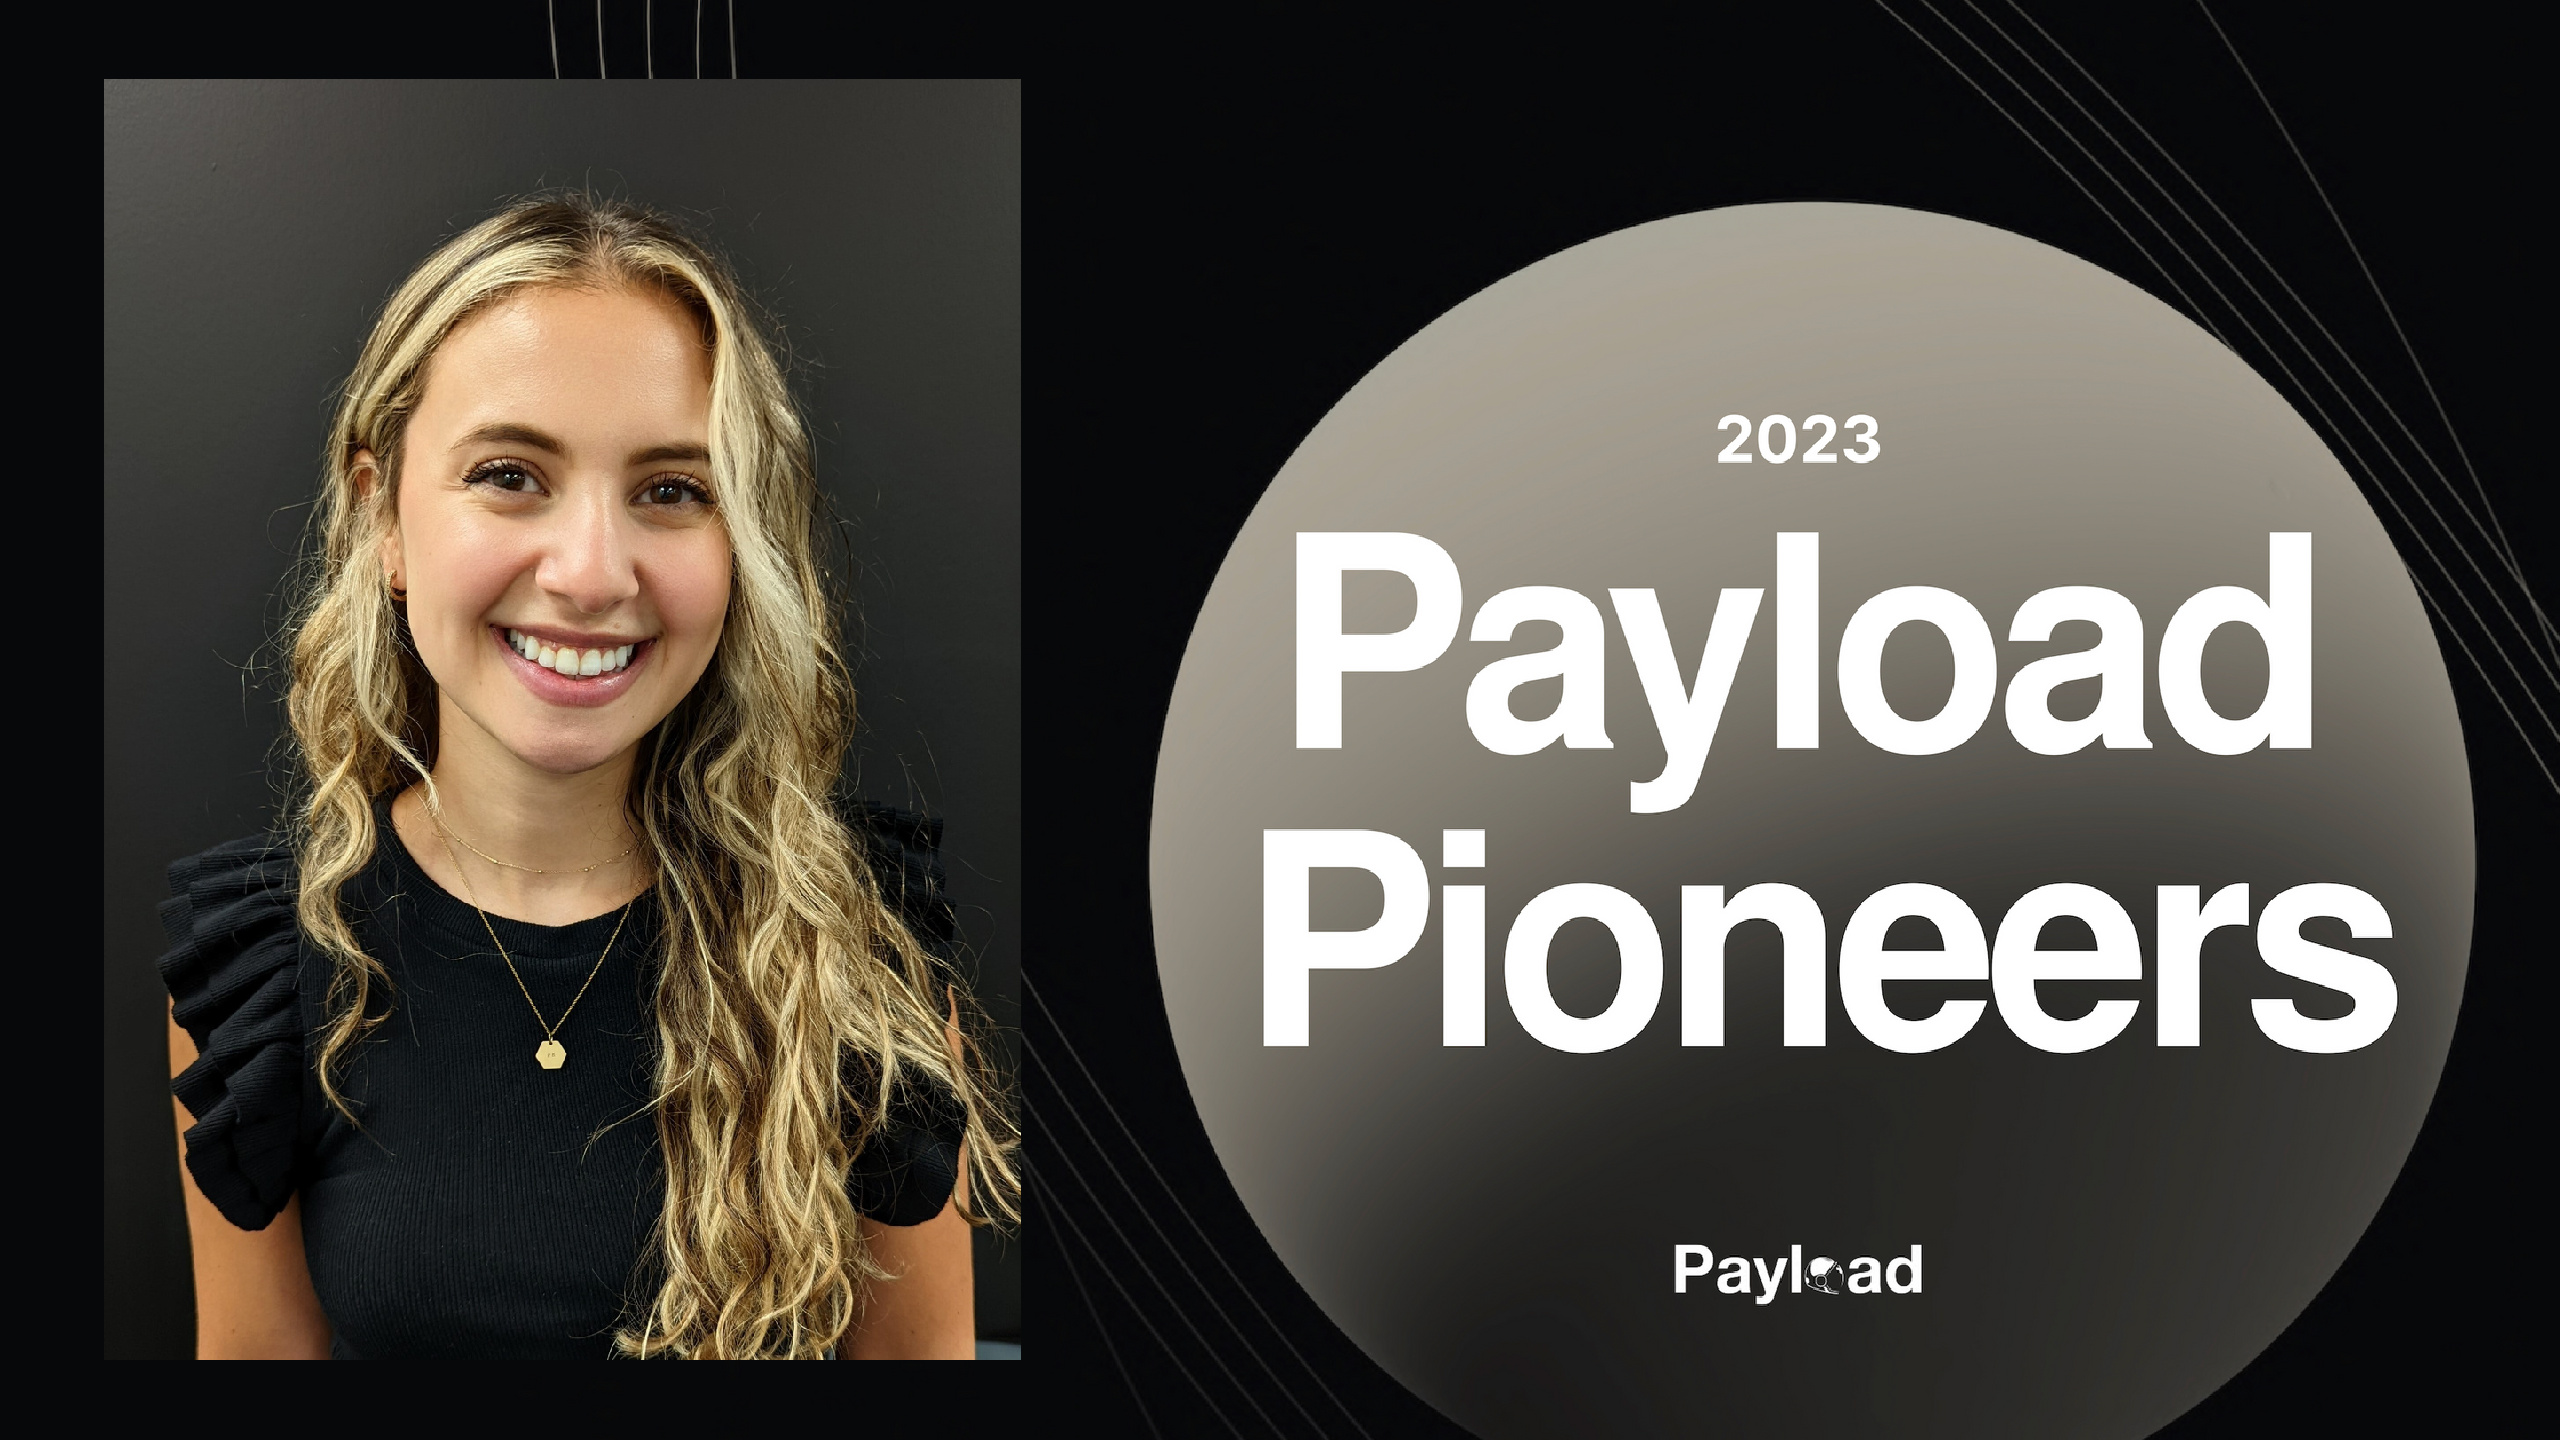 Payload Pioneers 2023: Payton Barnwell